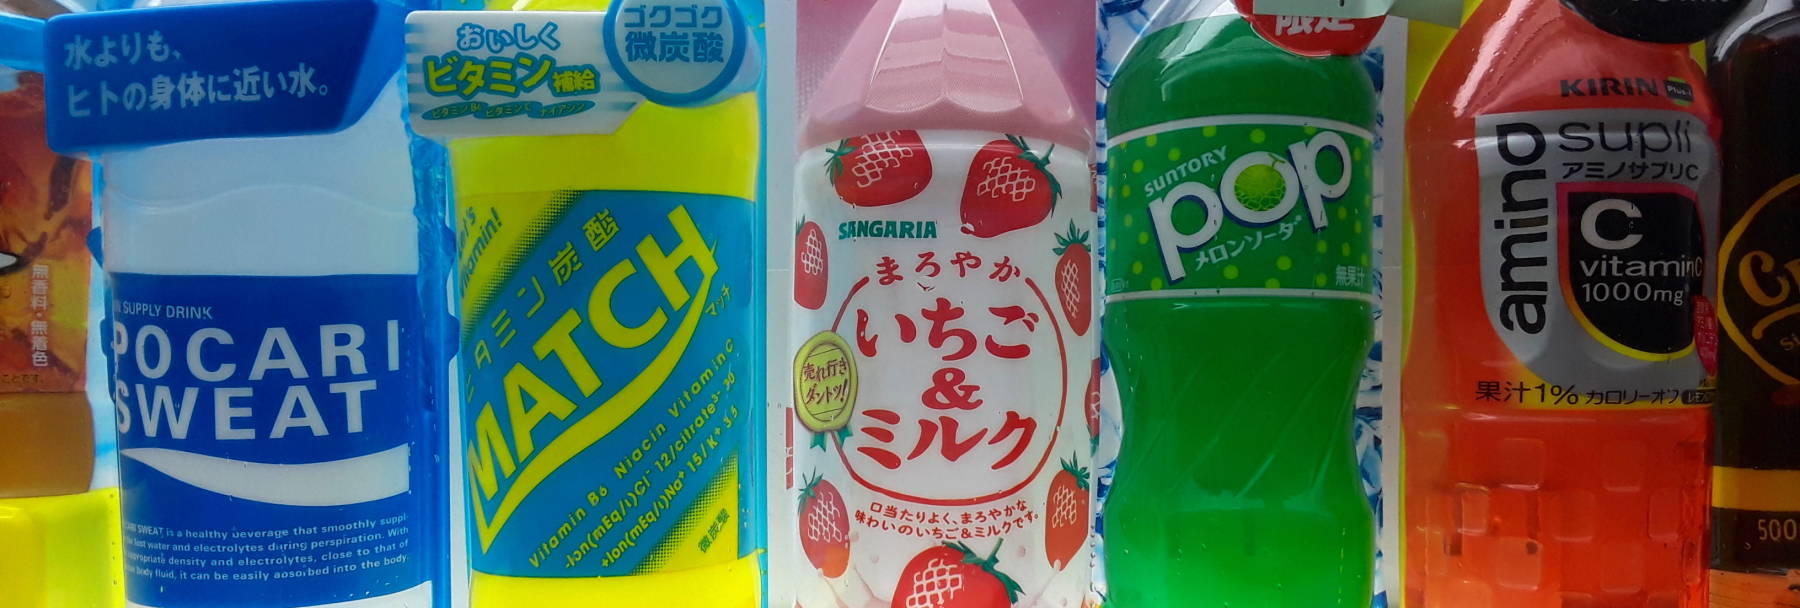 Drinks in a vending machine in Nagasaki.